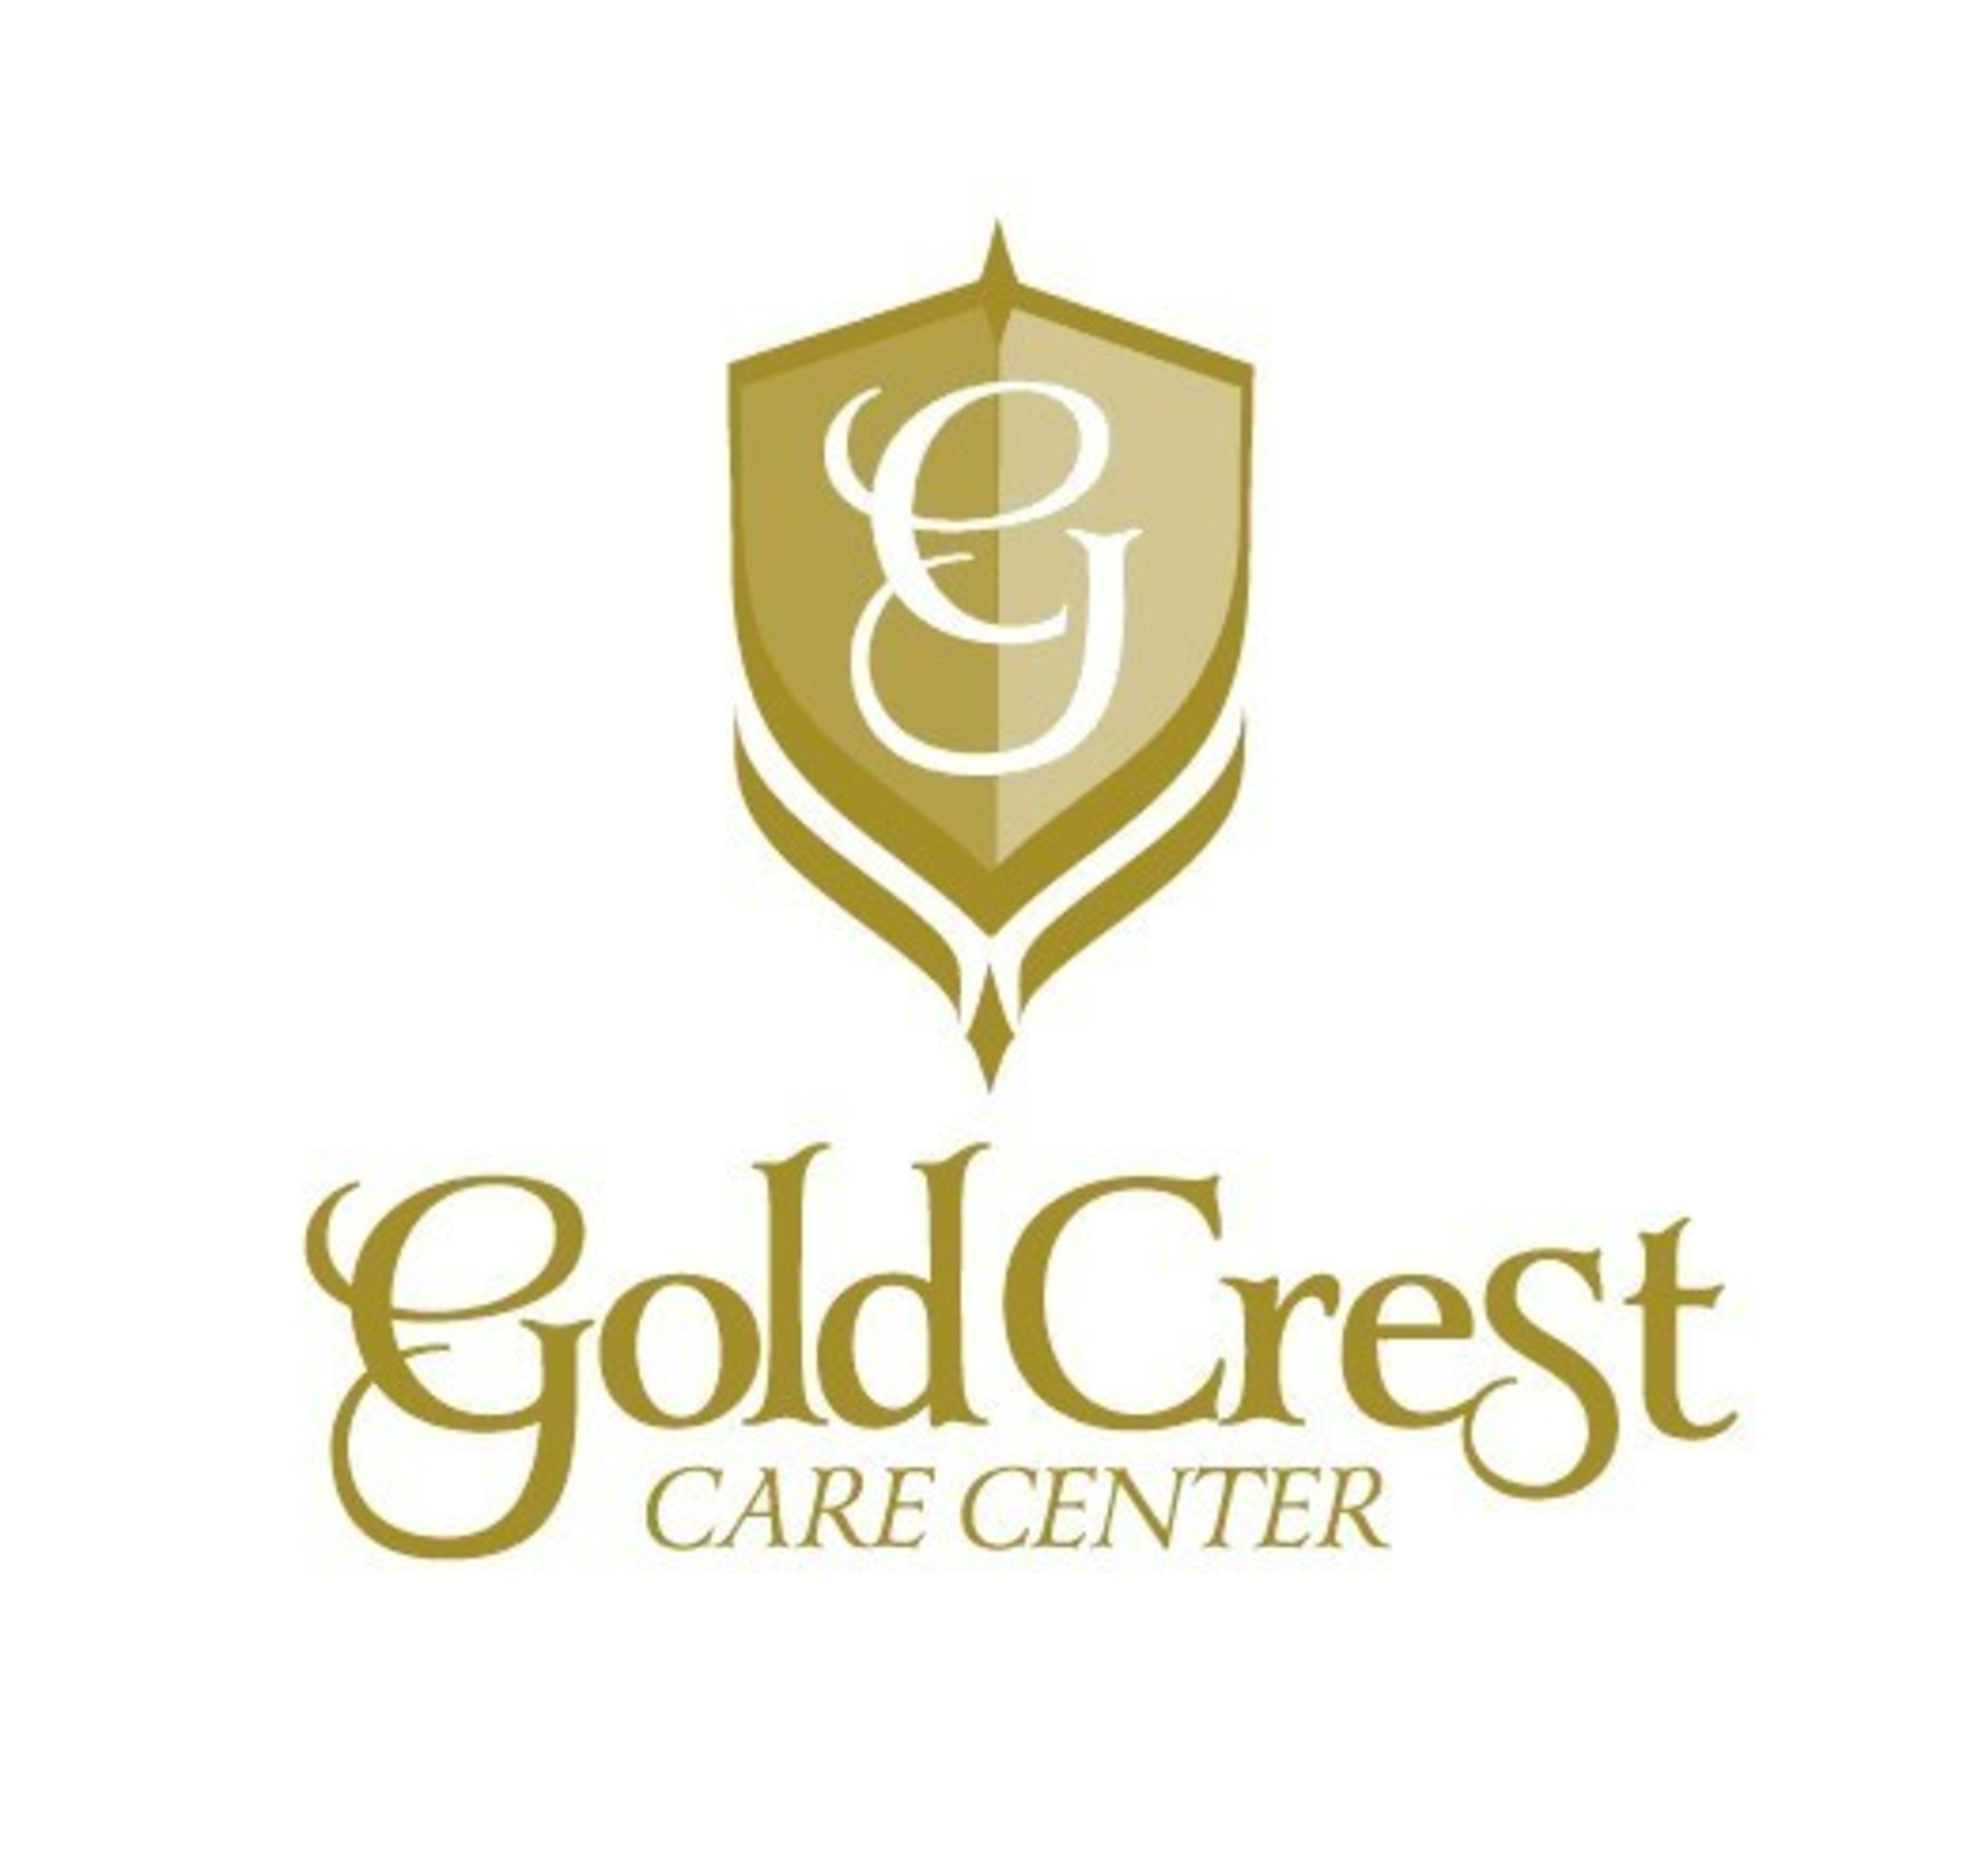 Gold Crest Care Center logo (PRNewsFoto/Gold Crest Care Center)